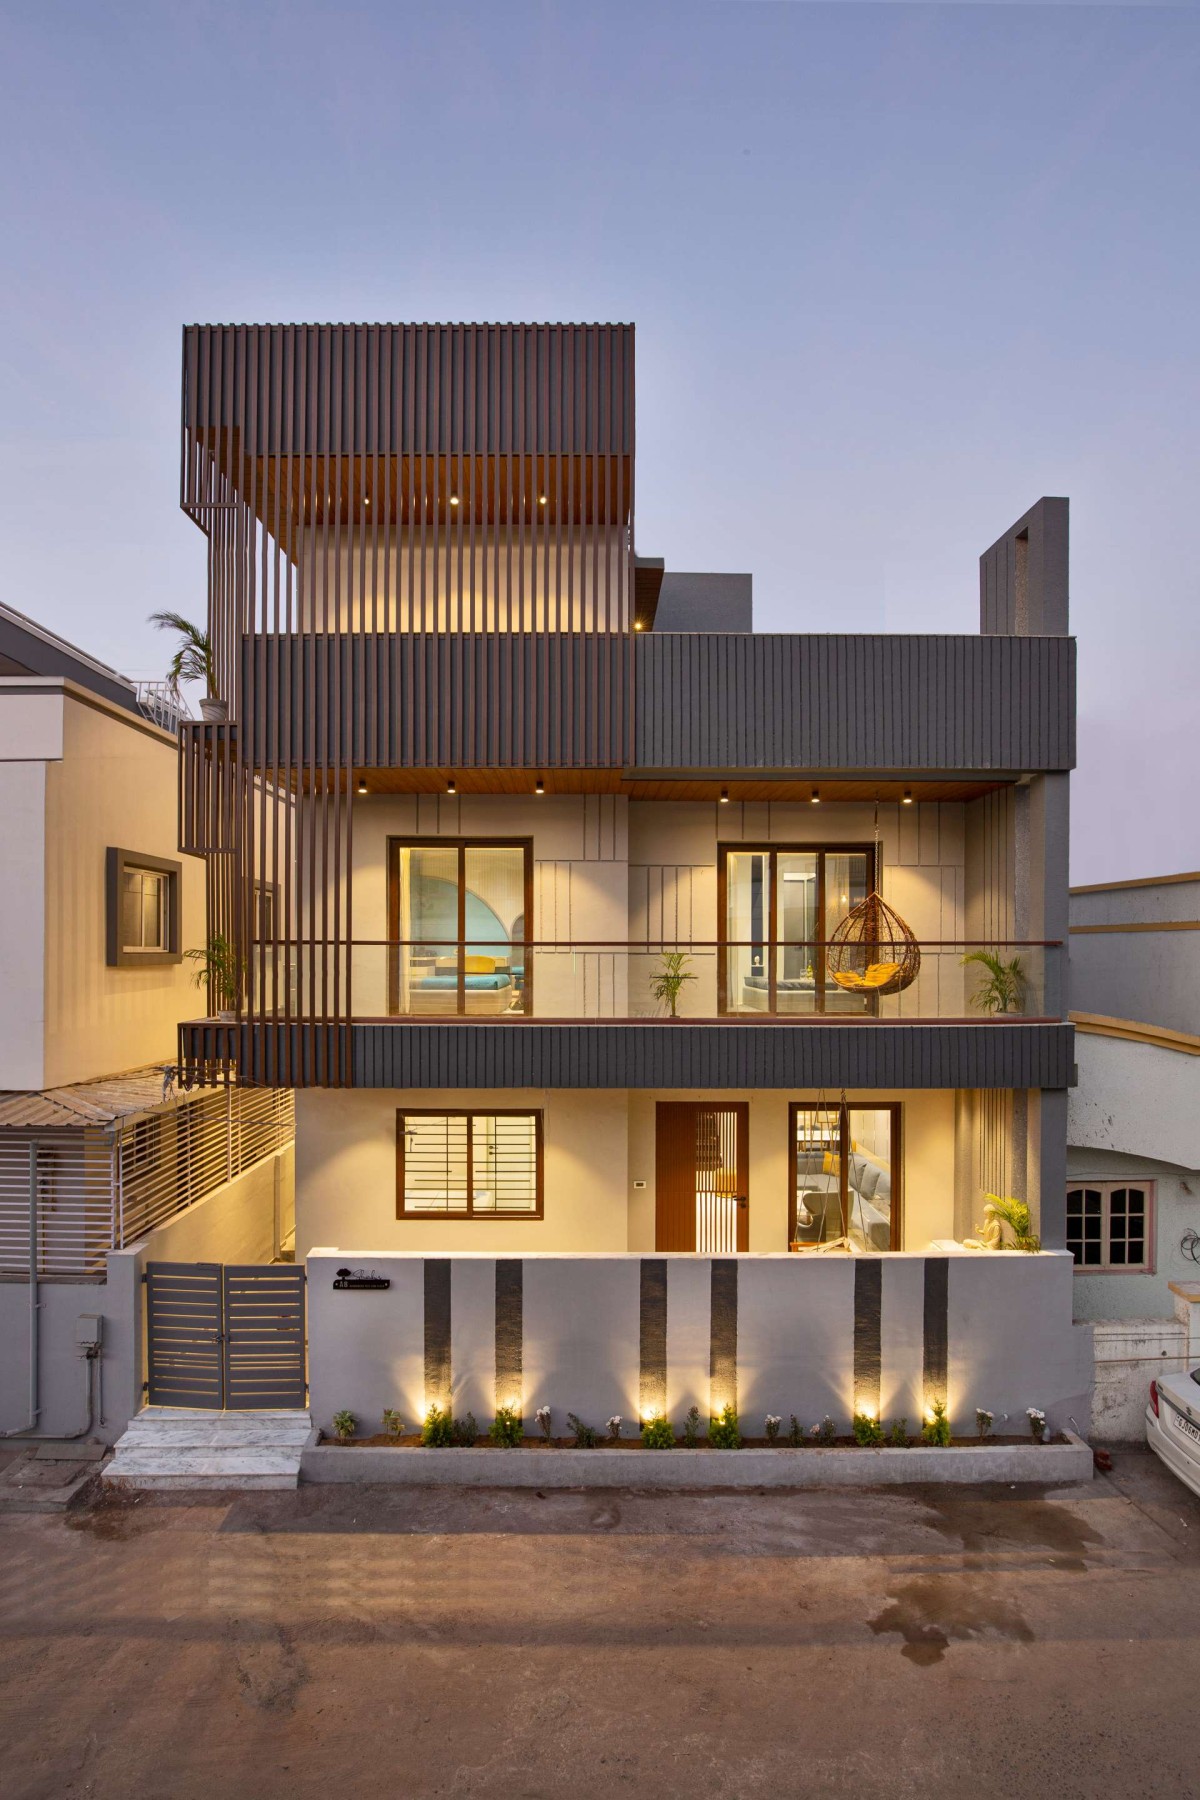 The Linear House by Ekam Studio